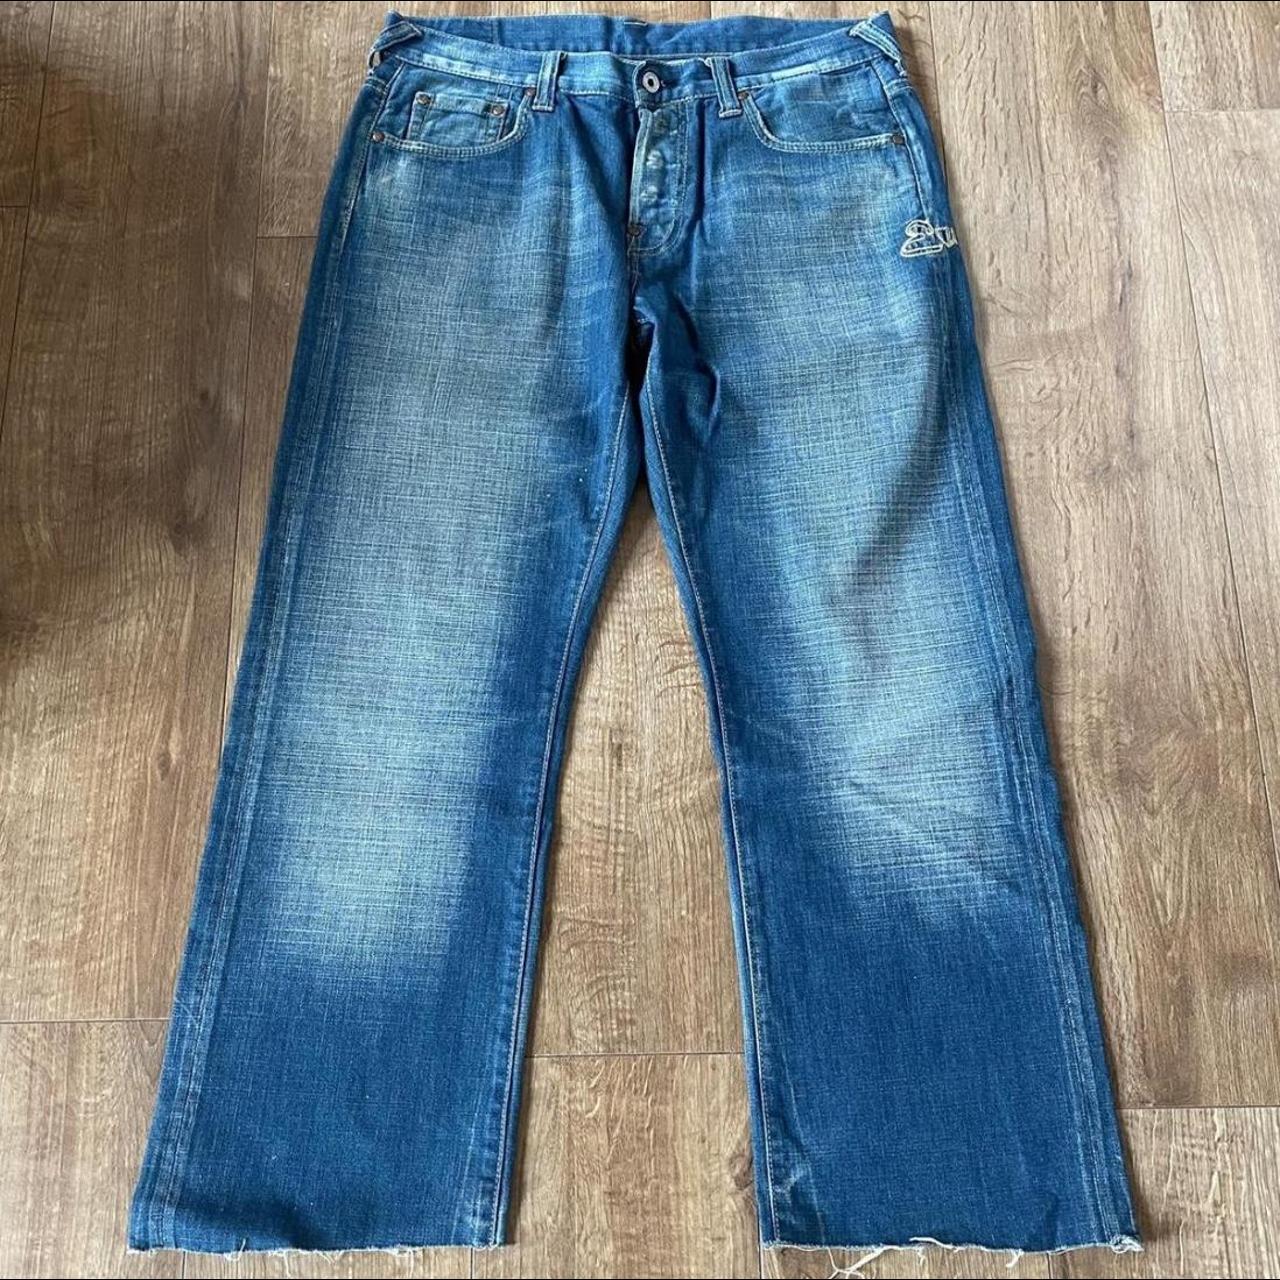 Original Evisu jeans 34” waist, approx 29”... - Depop